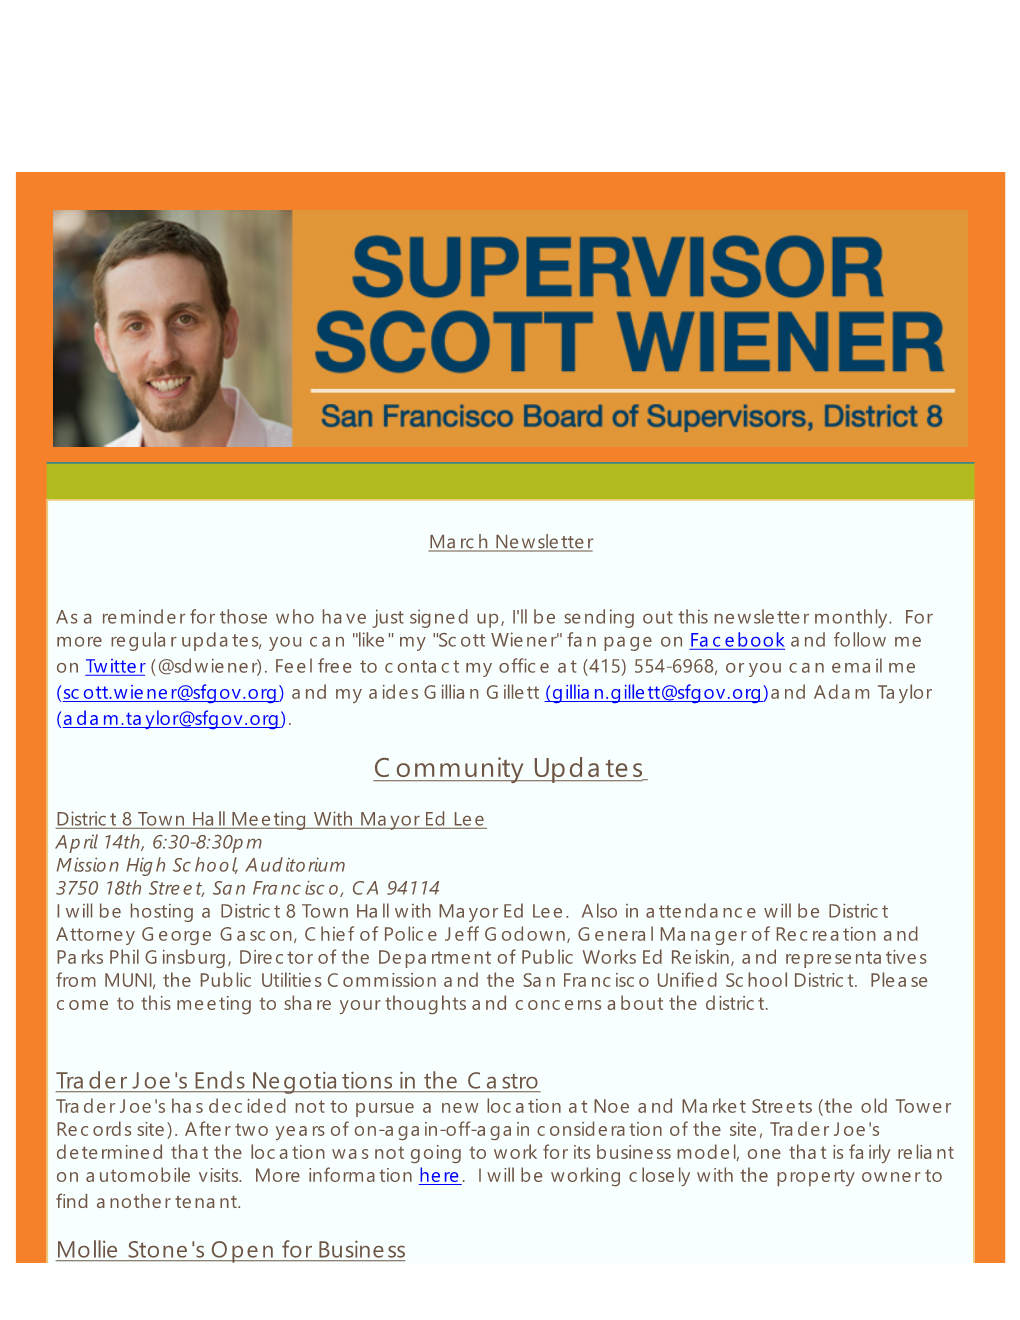 Supervisor Wiener's March 2011 Newsletter